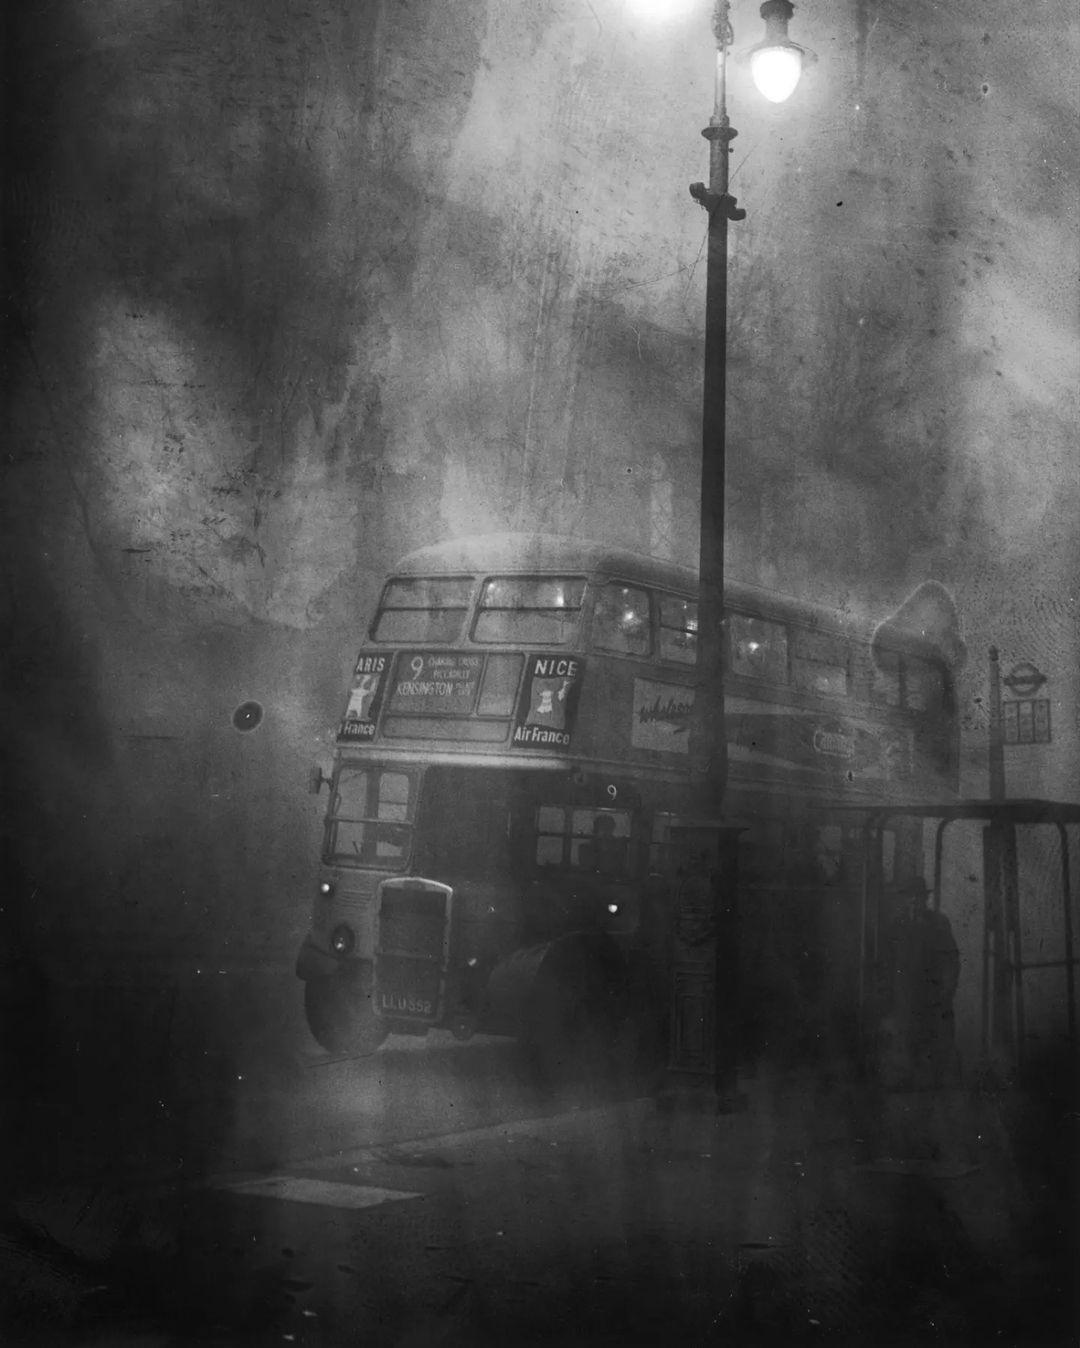 A London bus makes its way along Fleet street in heavy smog, 6th December 1952.jpeg